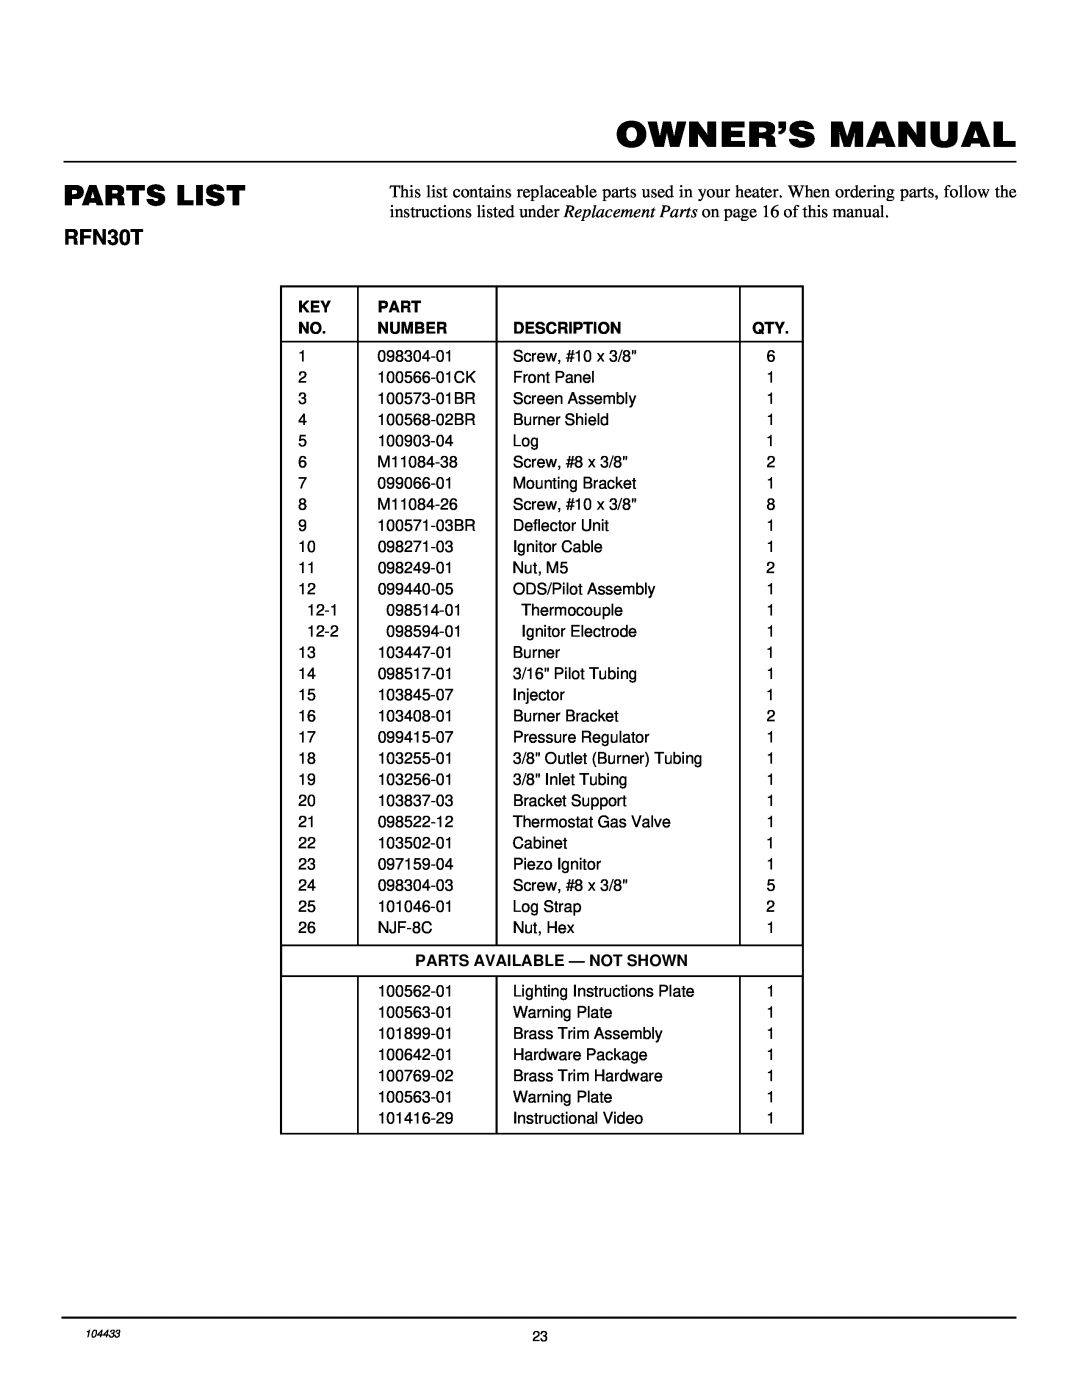 Desa RFN30T installation manual Parts List, Number, Description, Parts Available - Not Shown 